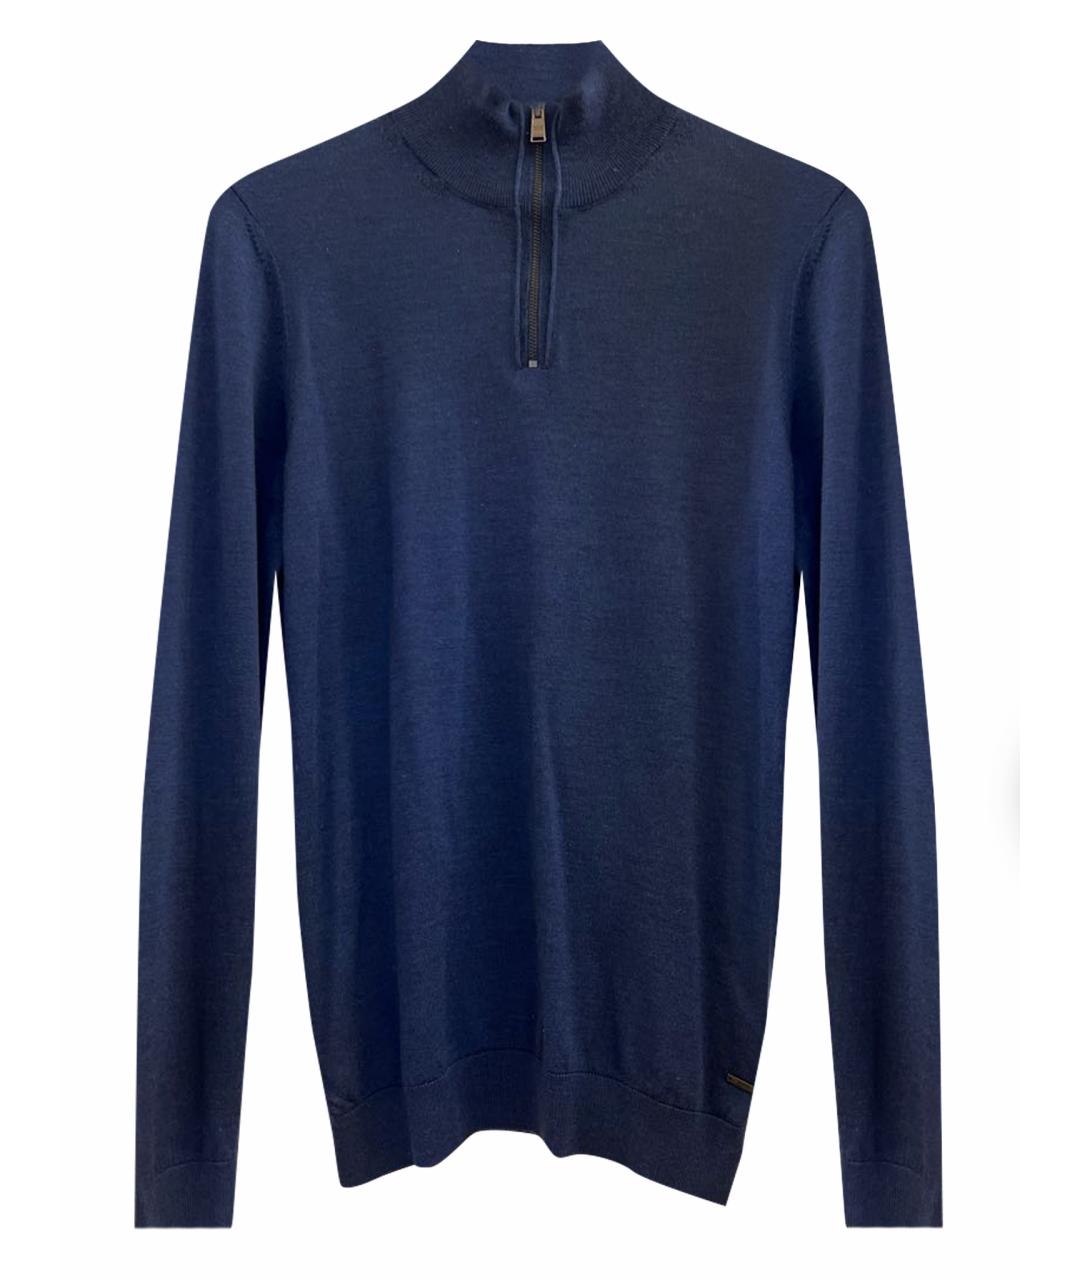 HUGO BOSS Темно-синий шерстяной джемпер / свитер, фото 1